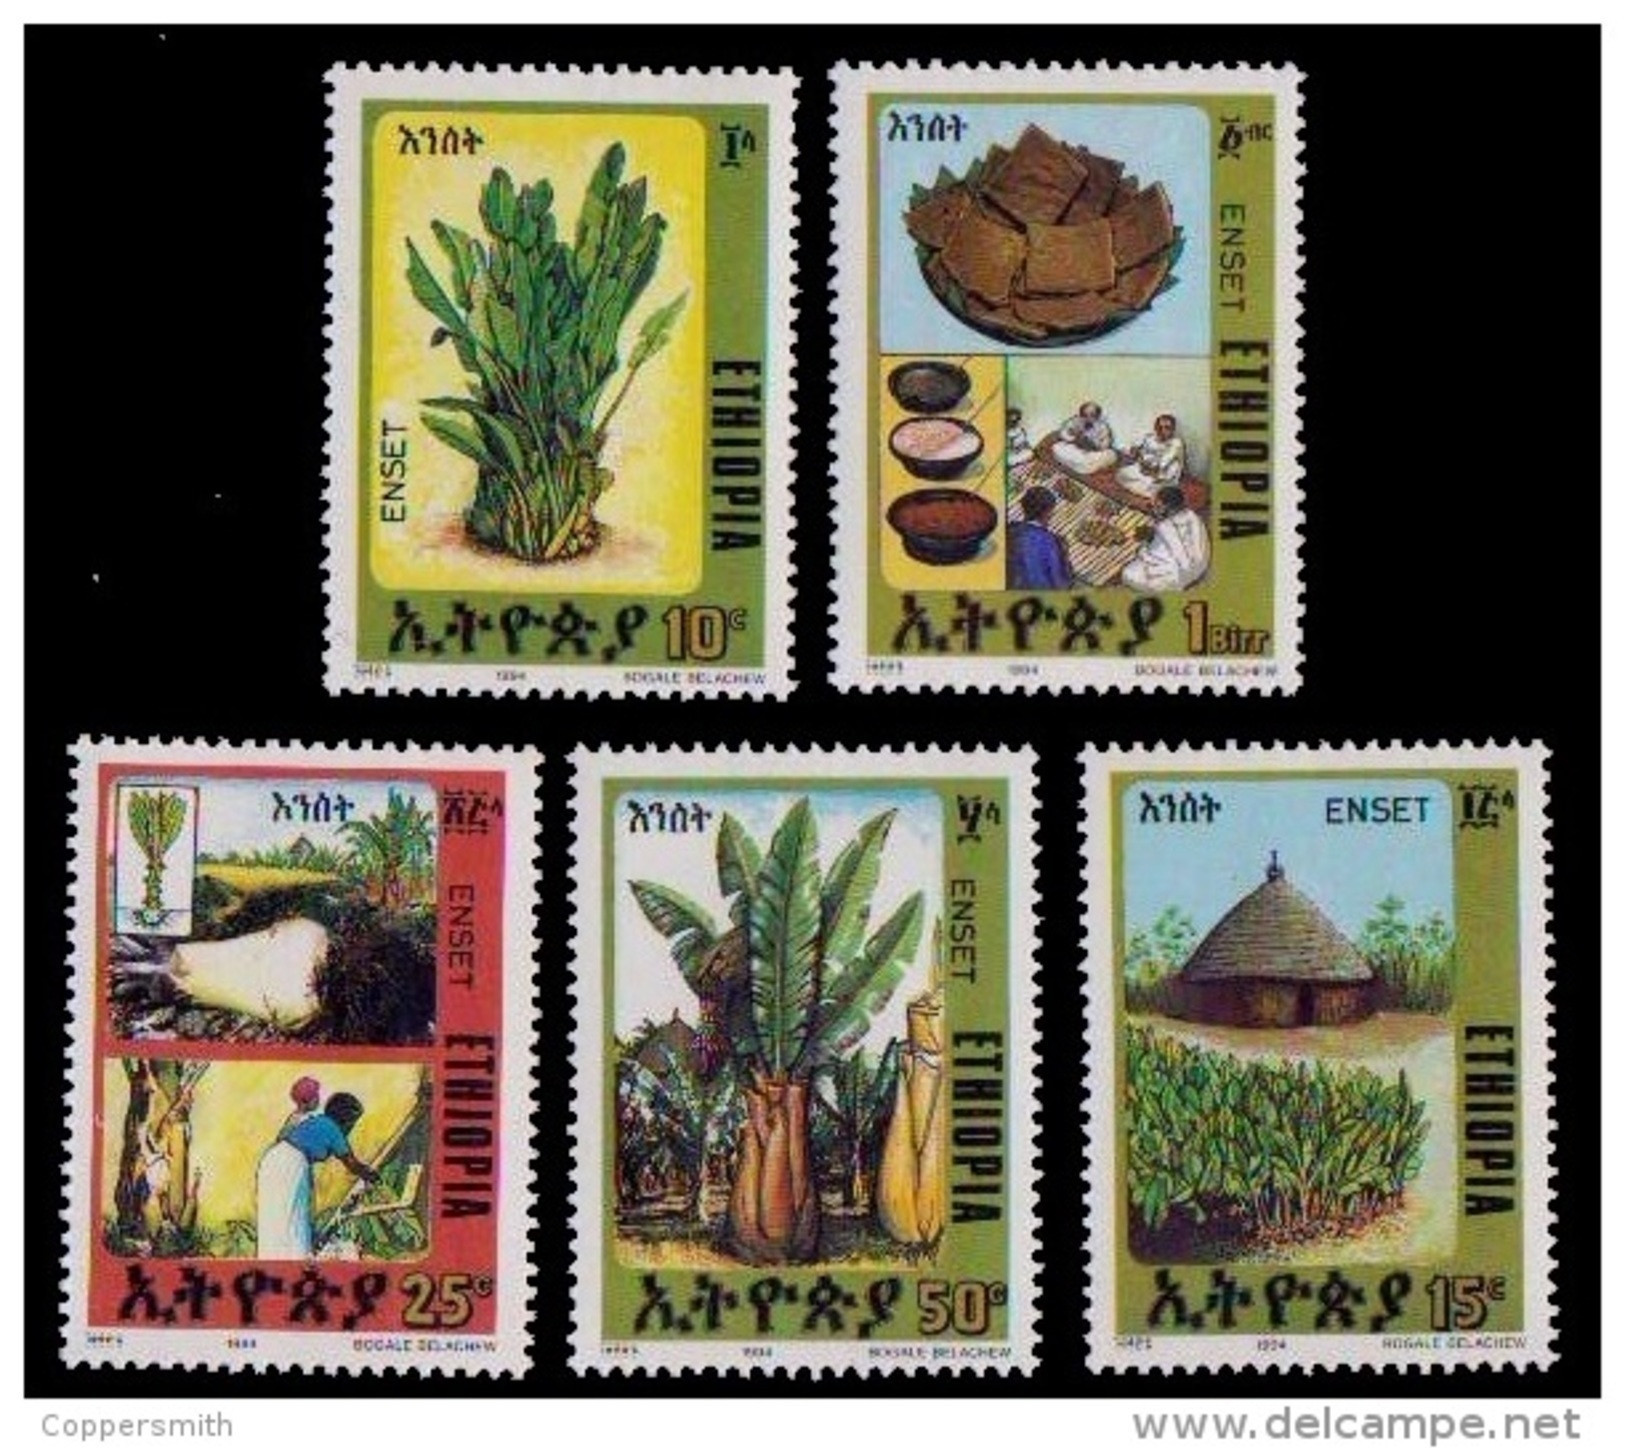 (356) Ethiopia / Ethiopie  Plants / Flora / Fruits / Bananas / Früchte / 1994 ** / Mnh  Michel 1477-81 - Ethiopia